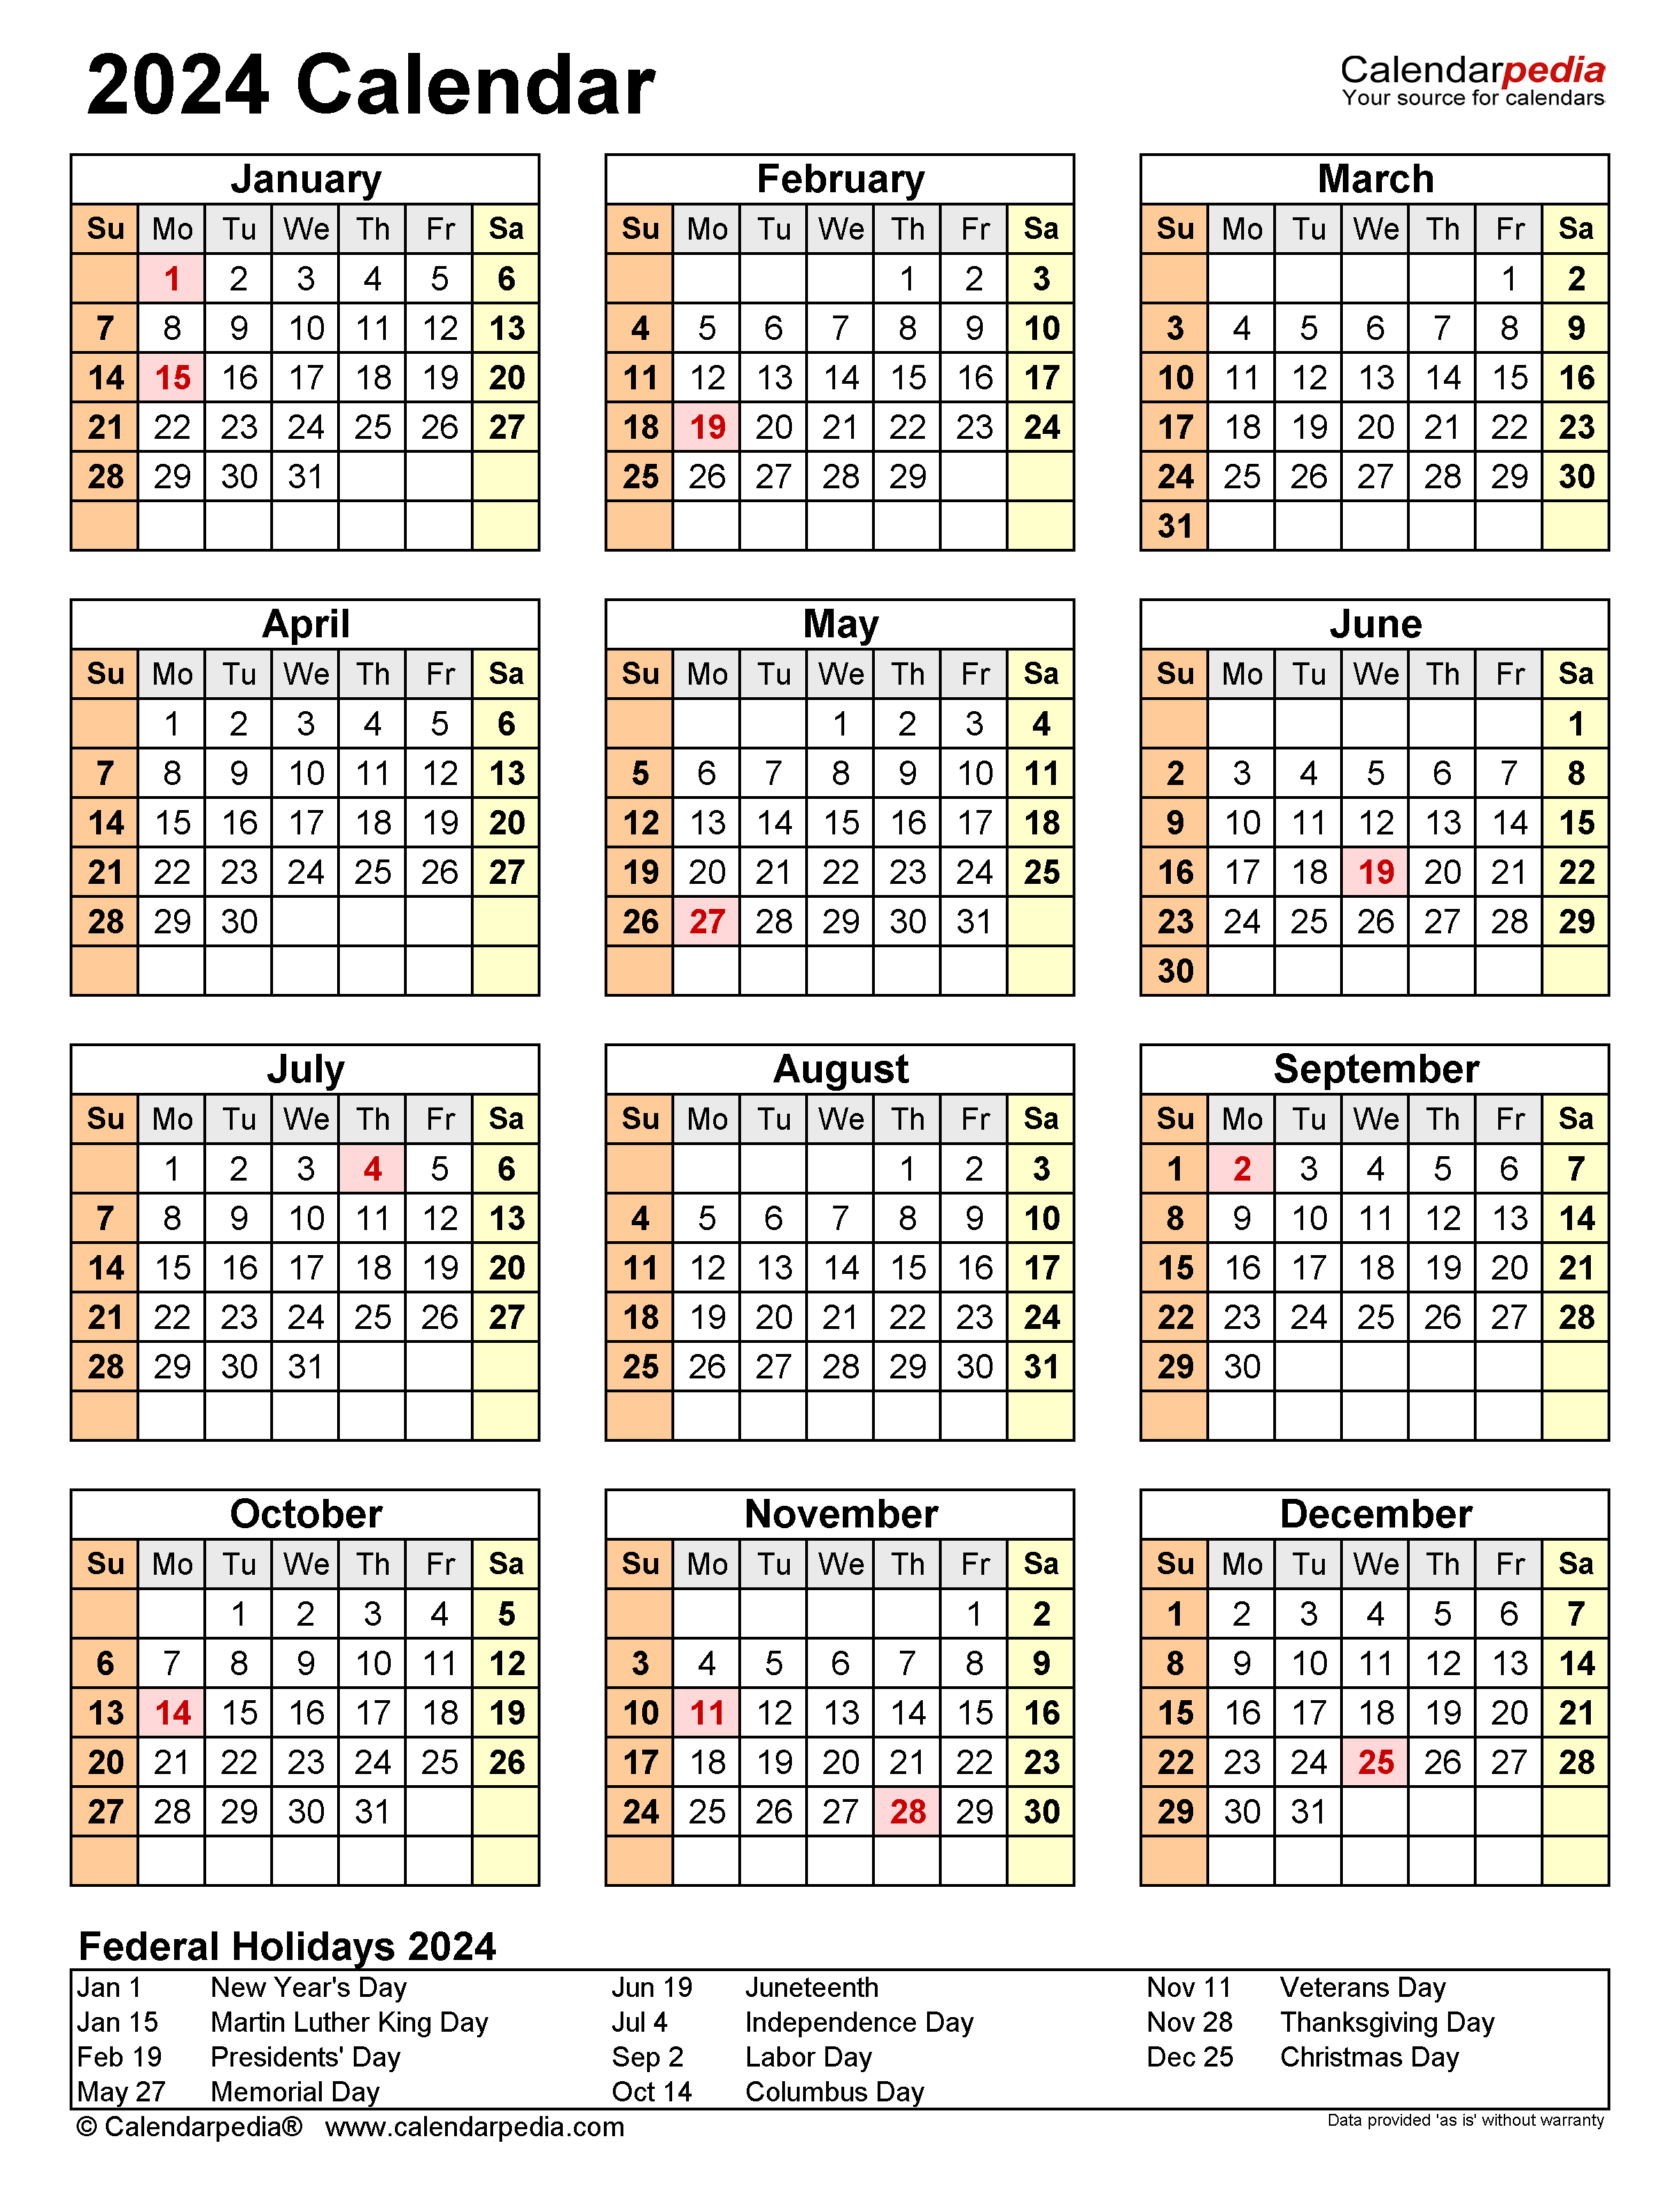 Free Printable 2024 Calendar With Holidays Crownflourmills | Free Printable 2024 Small Calendar With Holidays